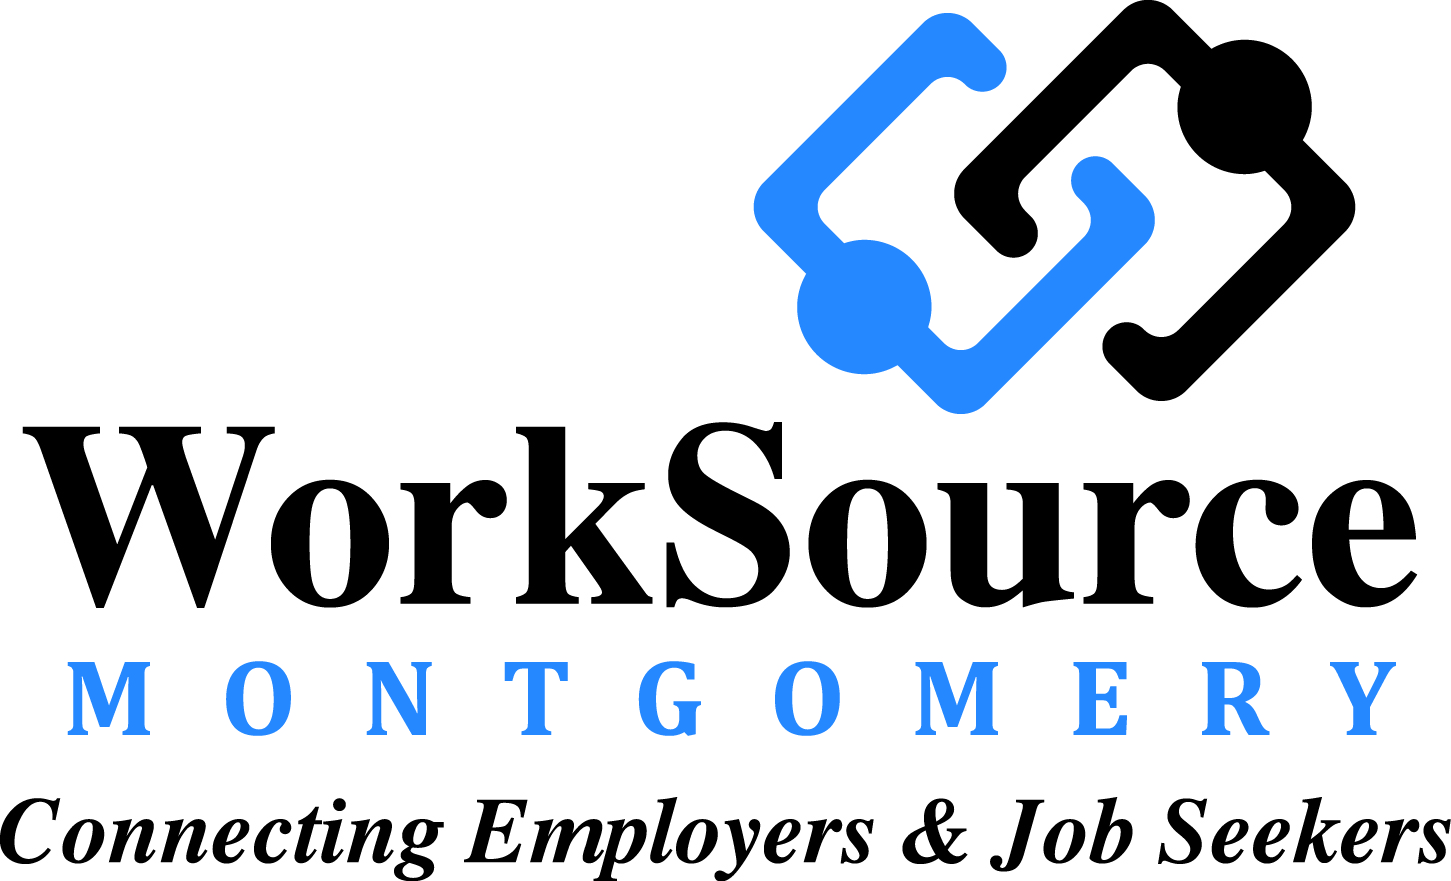 Worksource Montgomery